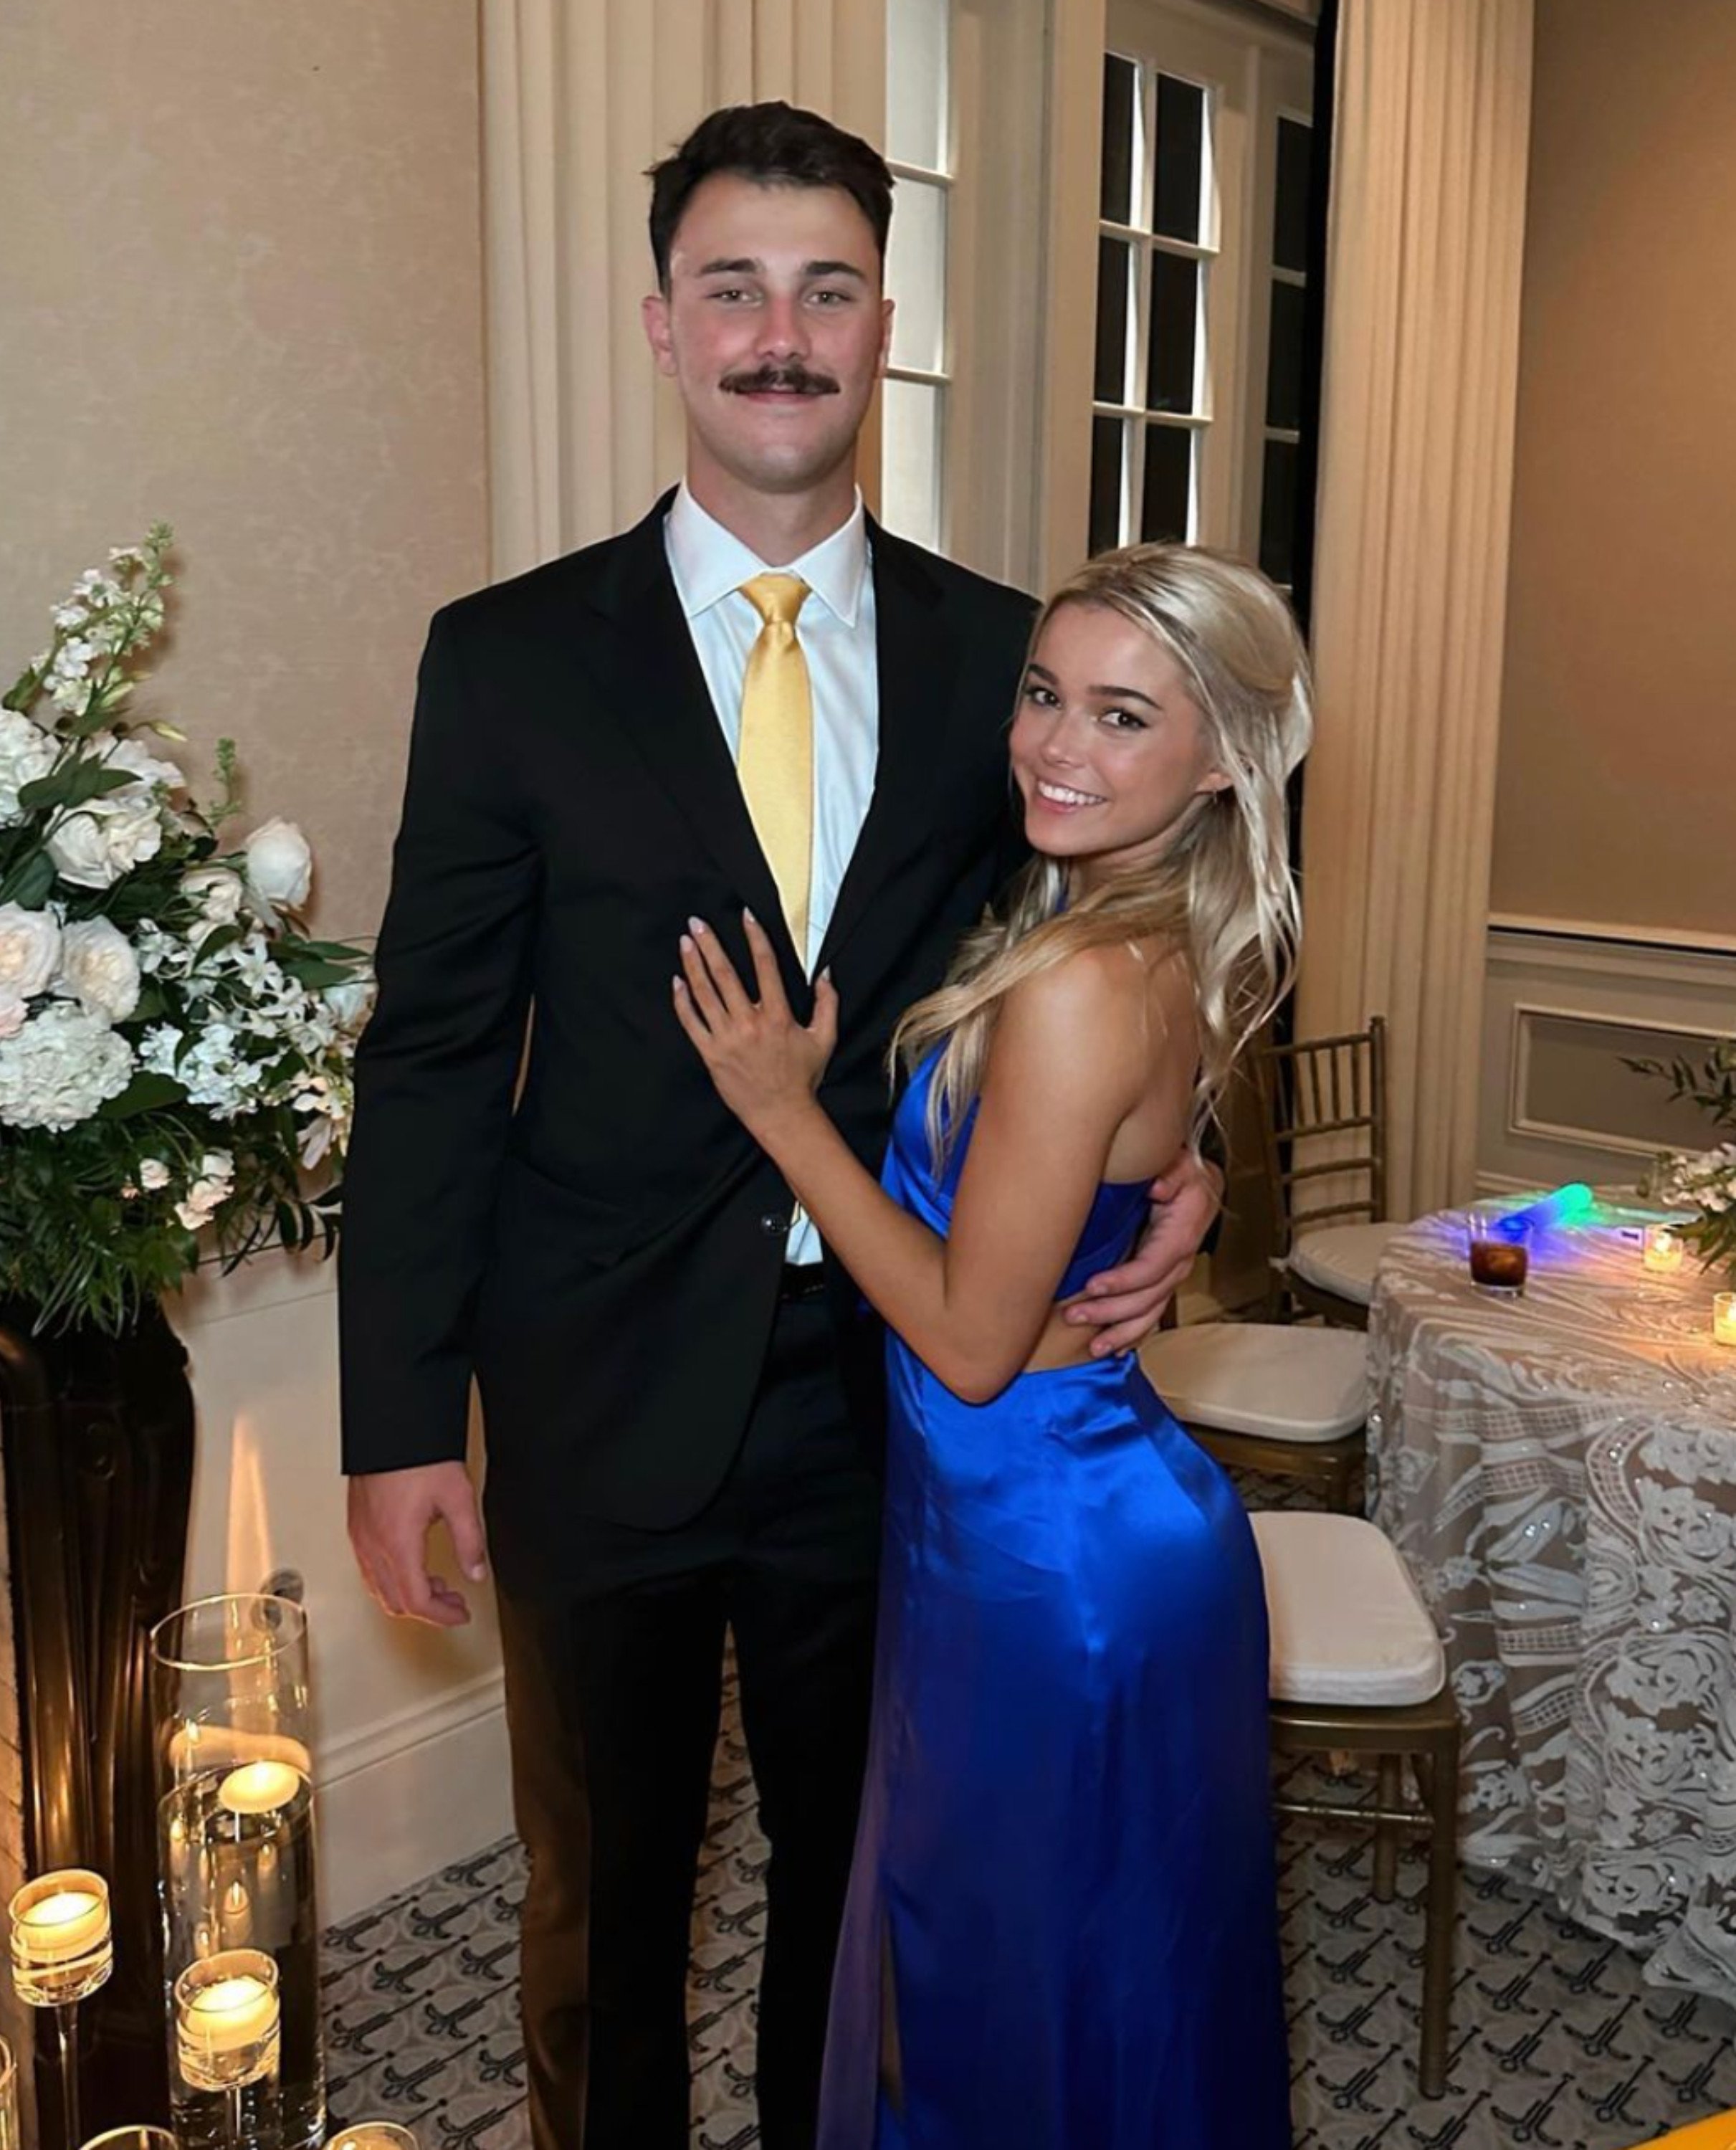 Rising baseball star Paul Skenes is dating gymnast and influencer Olivia “Livvy” Dunne. Photo: @livvydunne/Instagram 